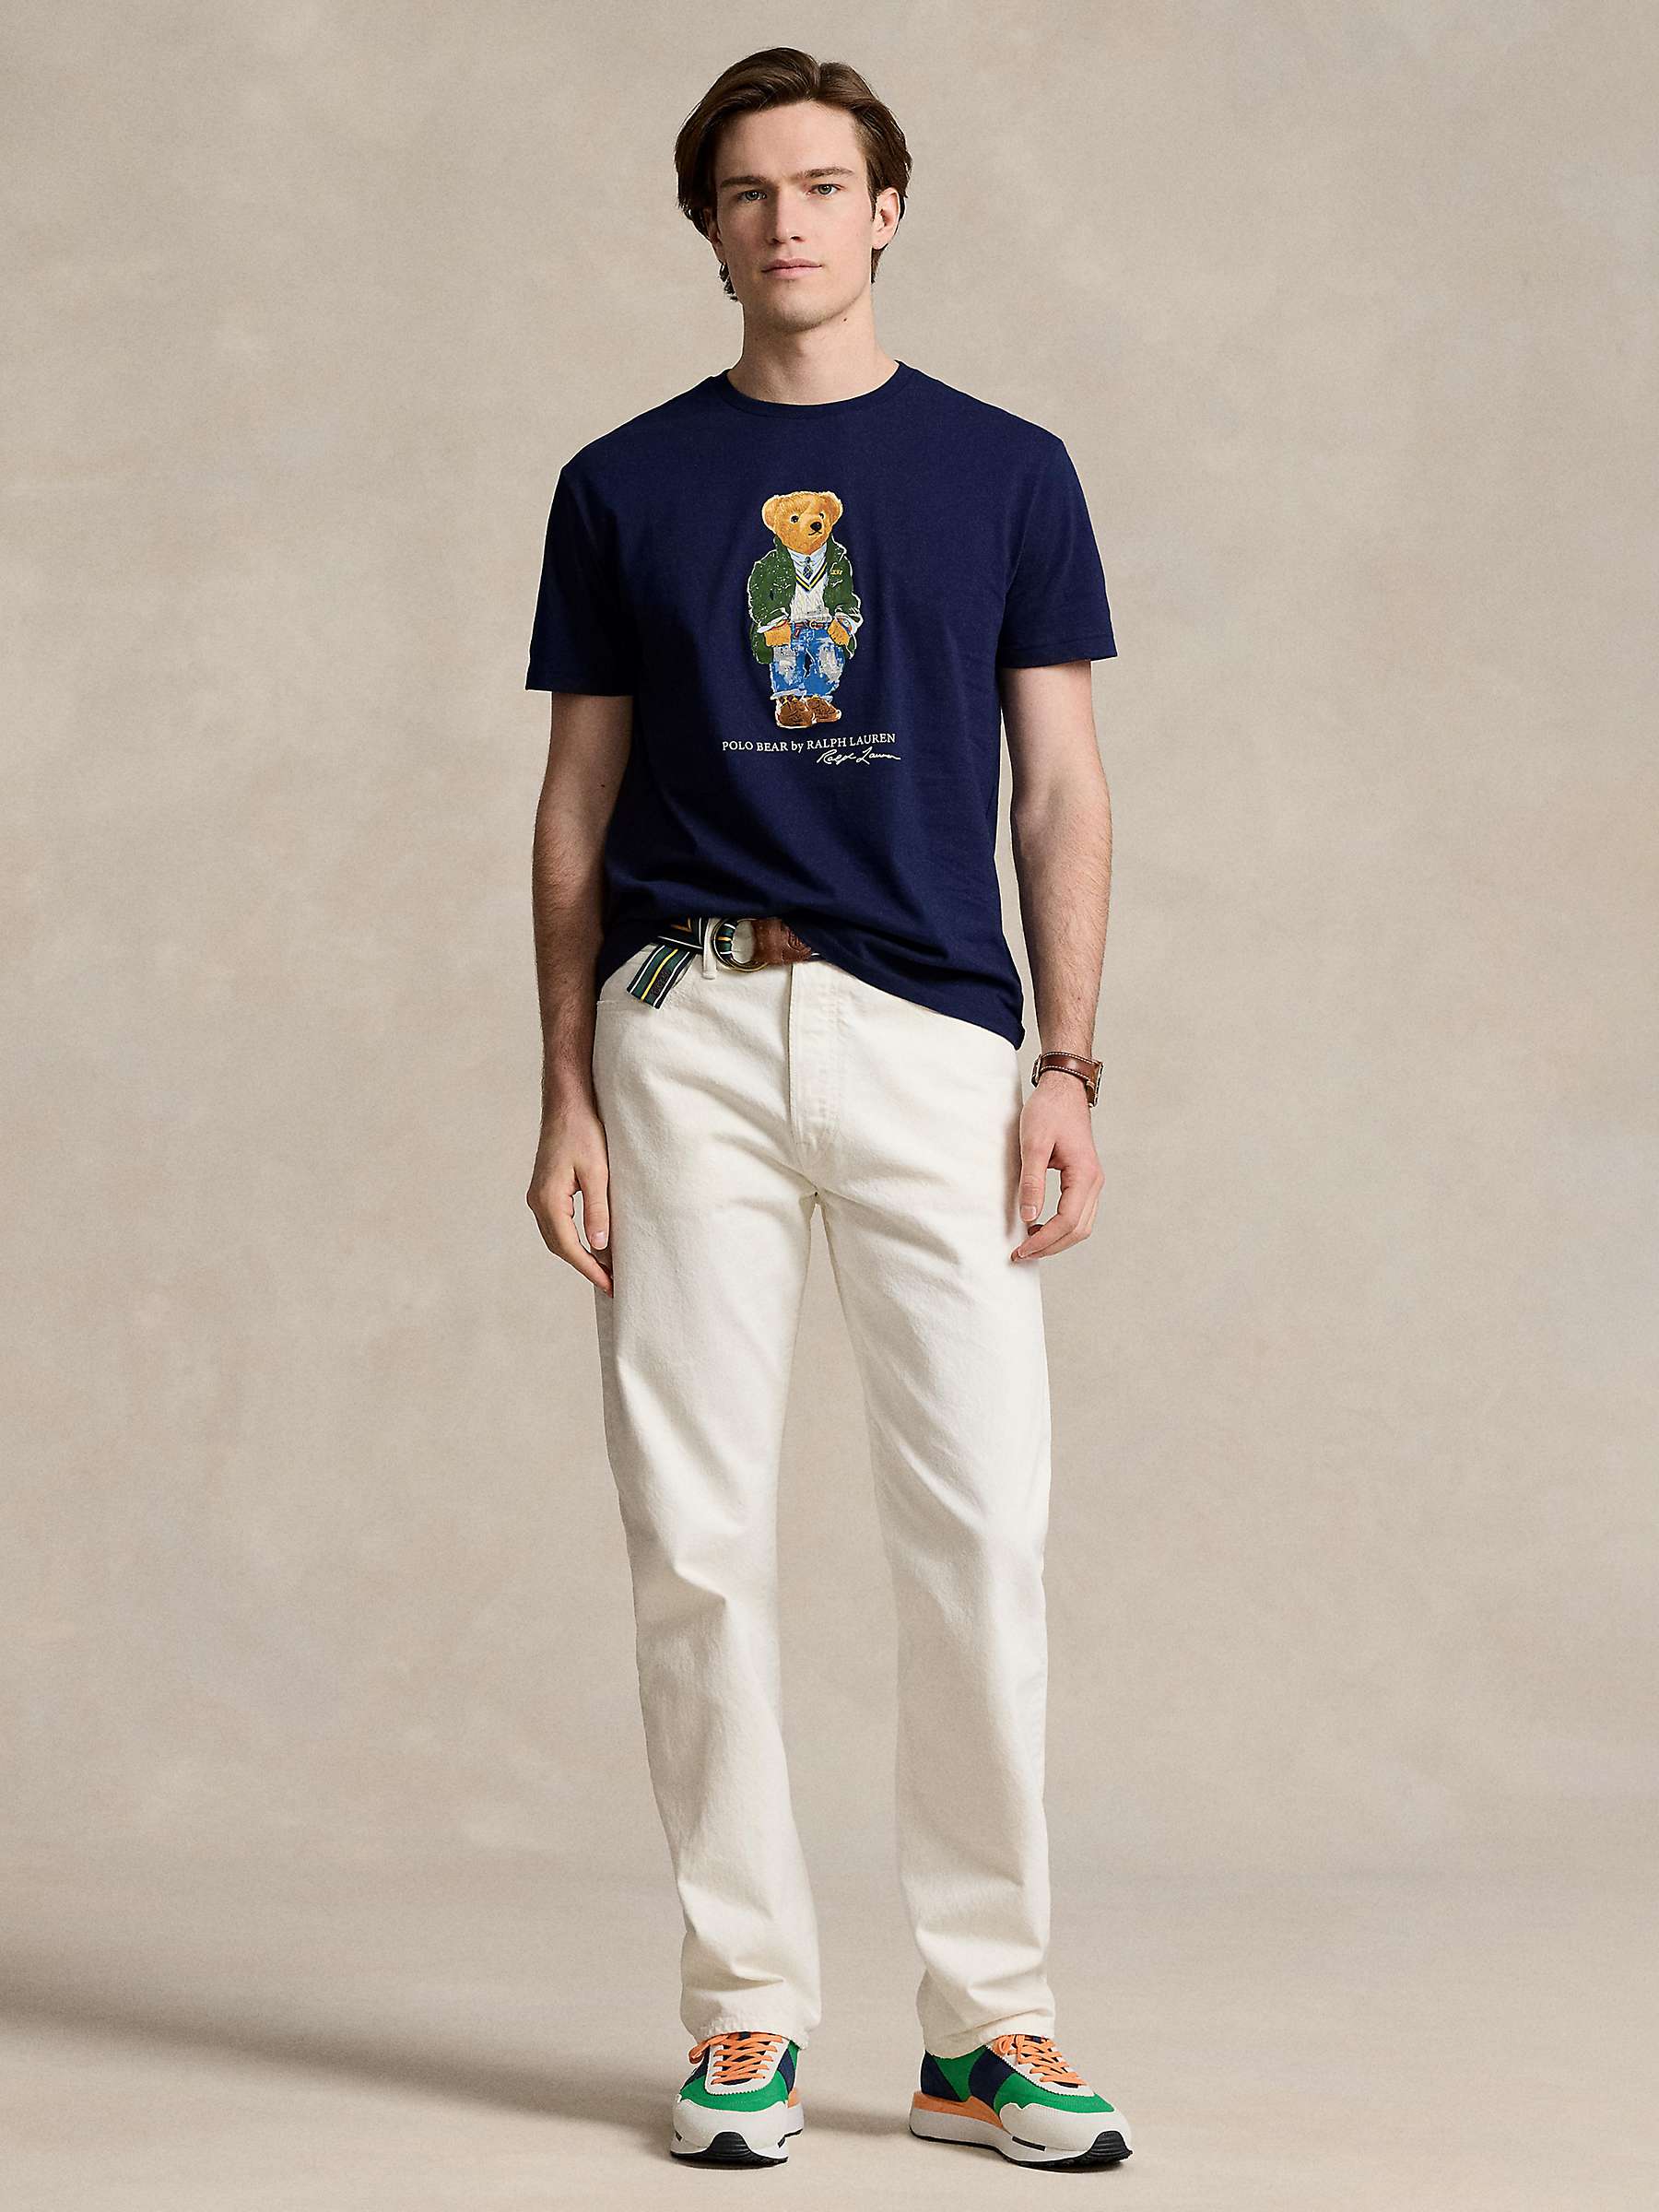 Buy Ralph Lauren Classic Fit Polo Bear Jersey T-Shirt, Navy Online at johnlewis.com